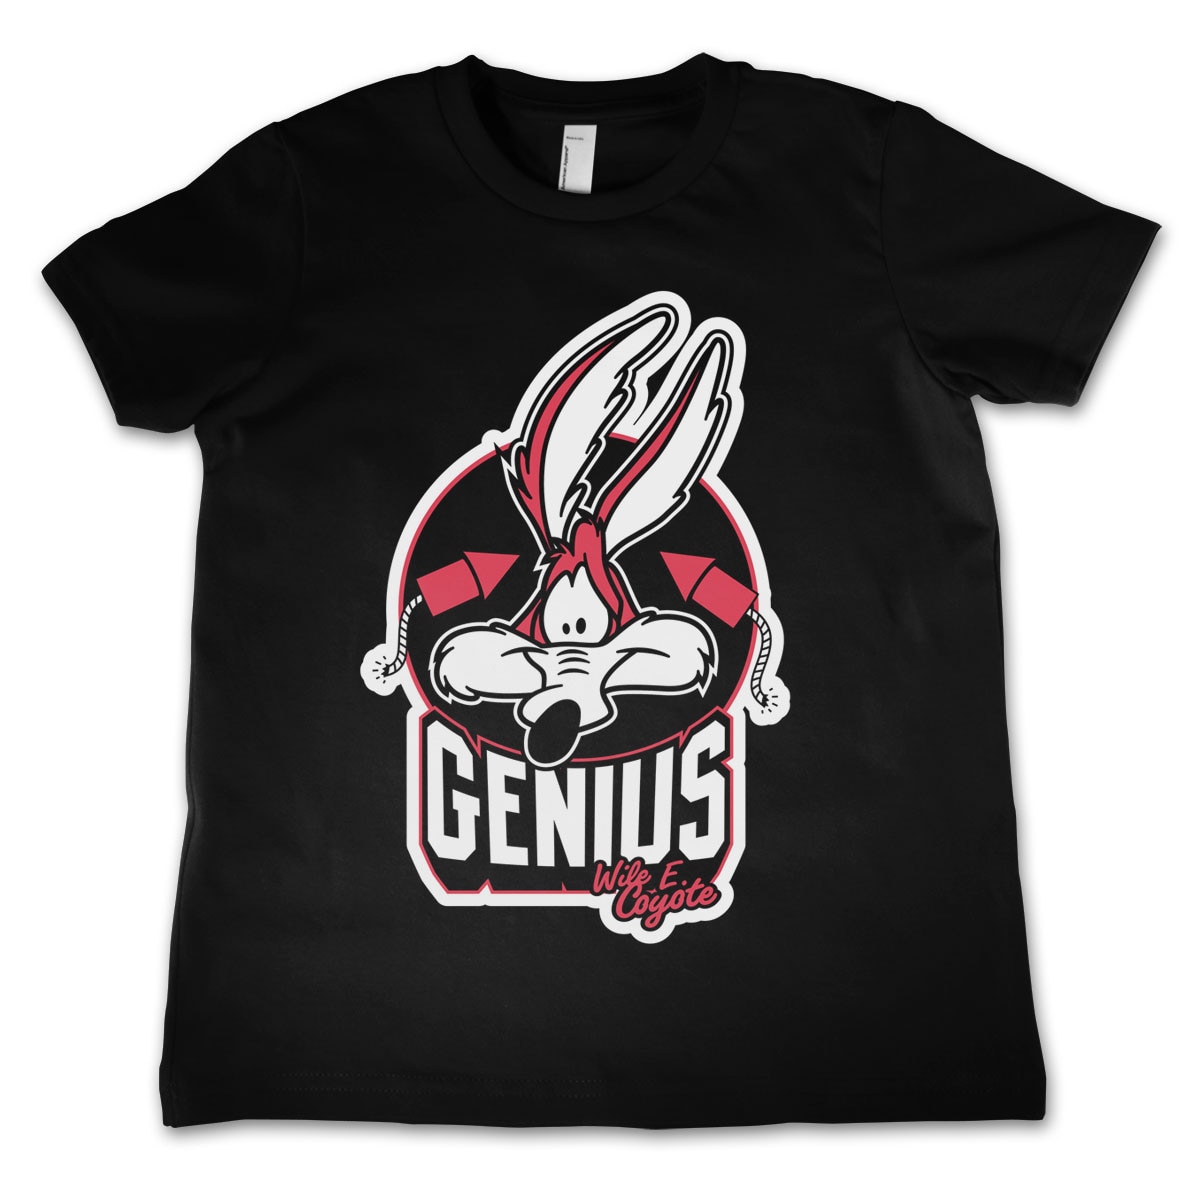 Wile E. Coyote - Genius Kids T-Shirt